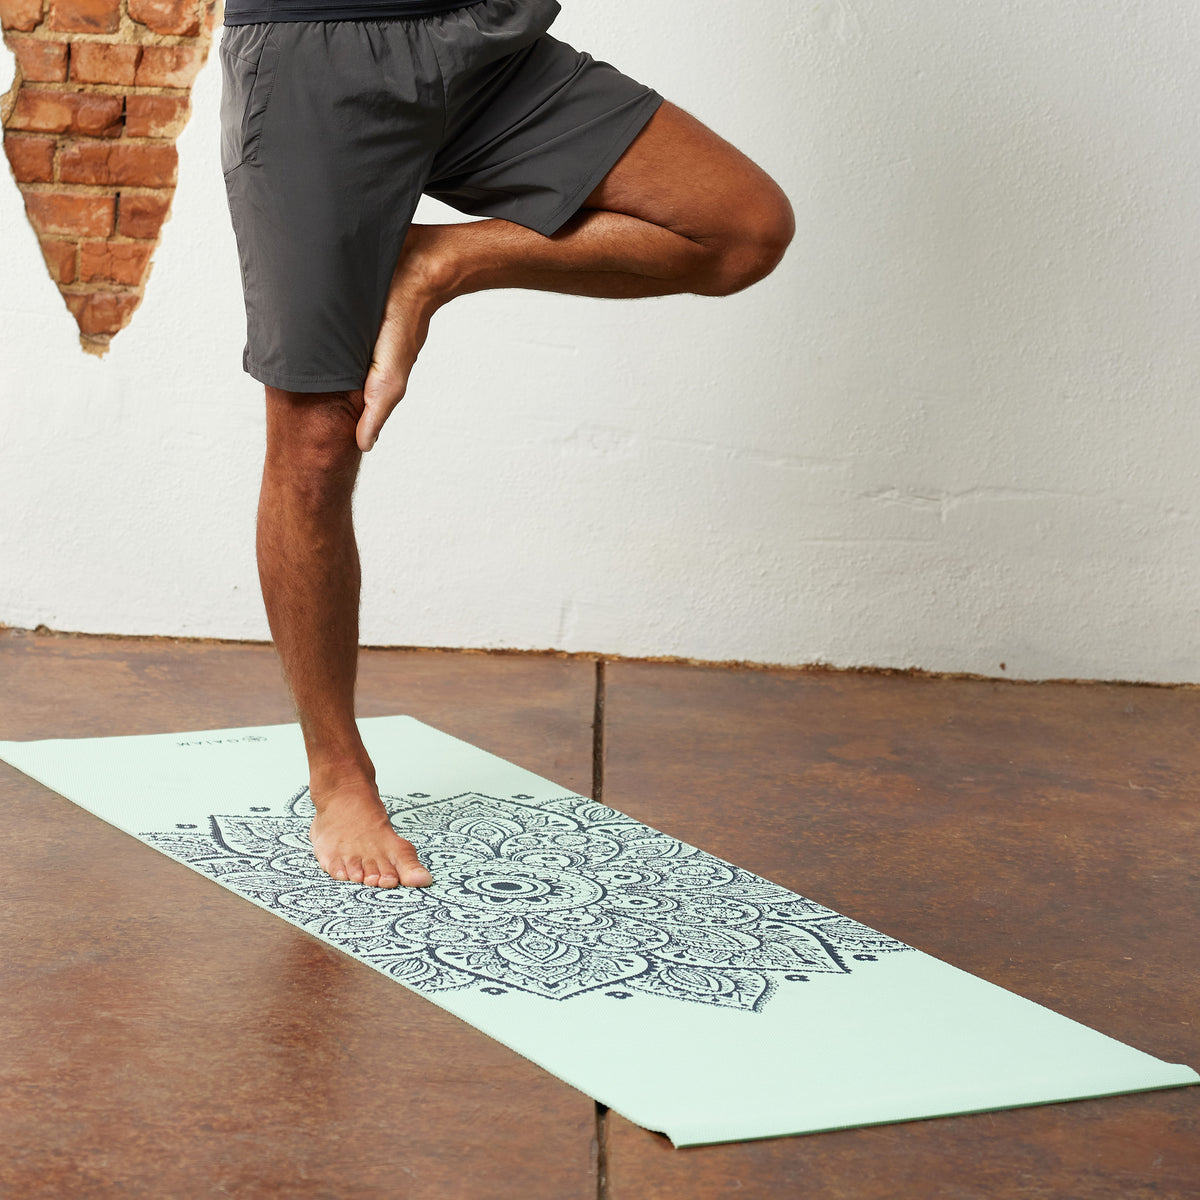 Premium Cork Yoga Mat - Buy for Best Comfort